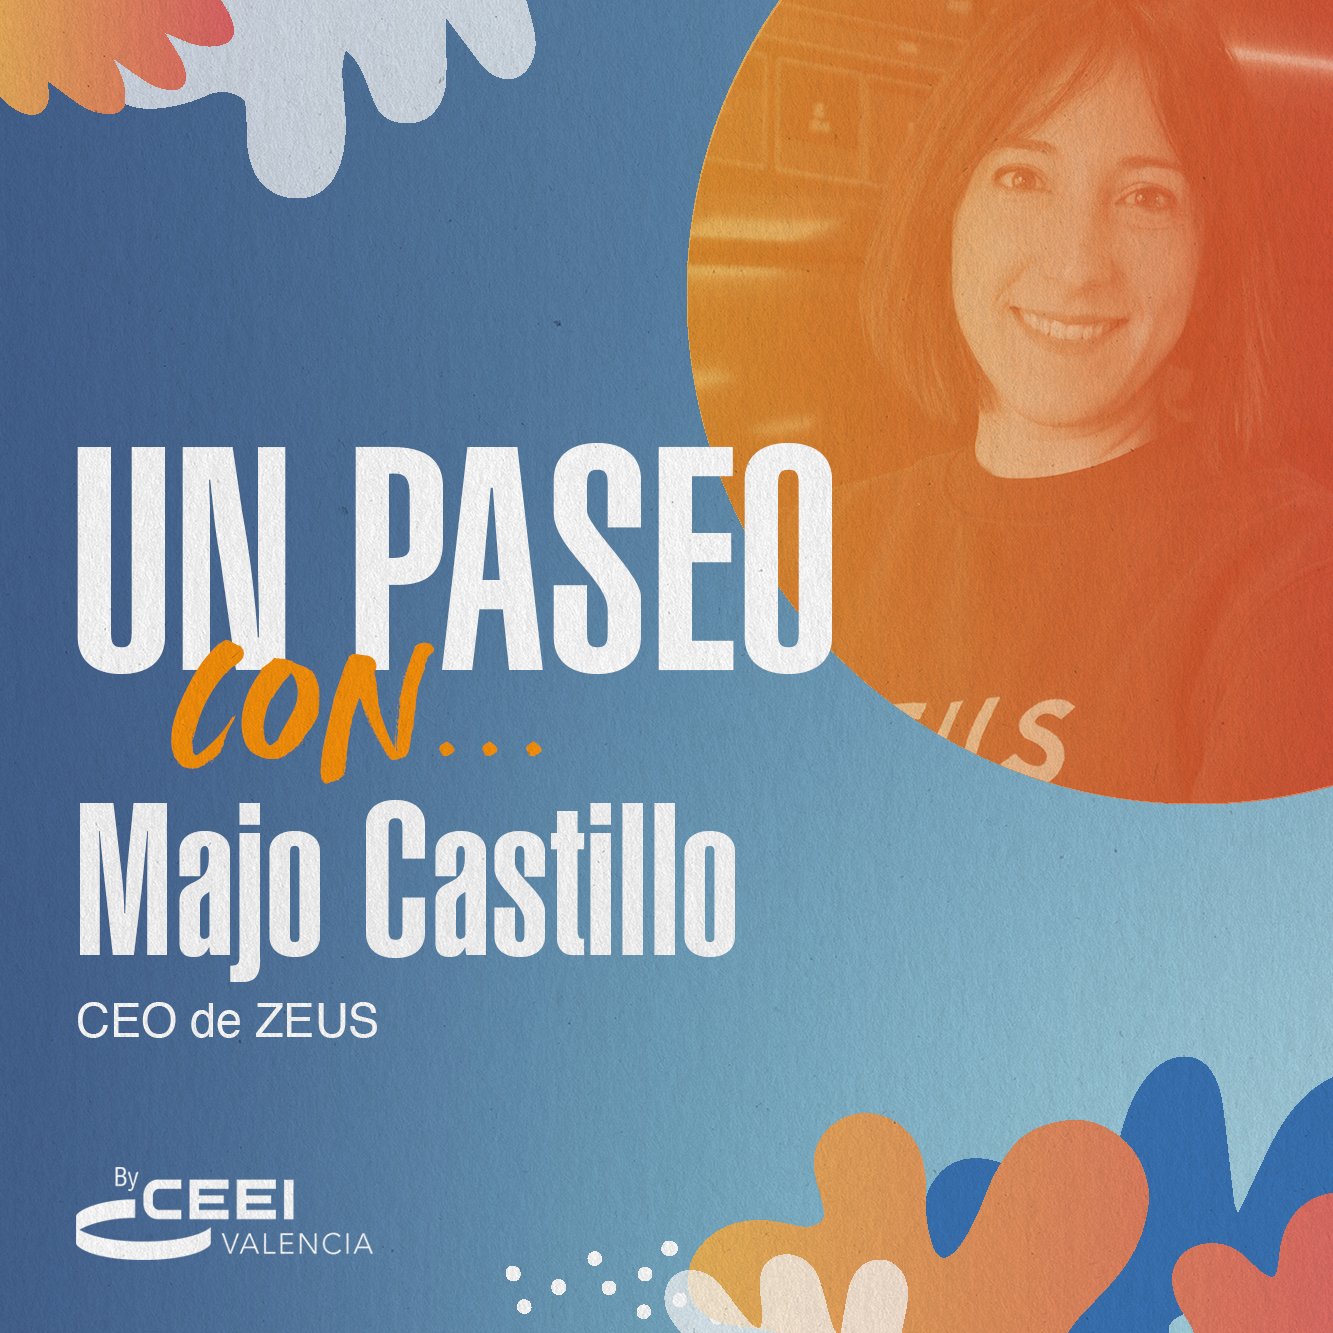 Un paseo con Majo Castillo, CEO de Zeus